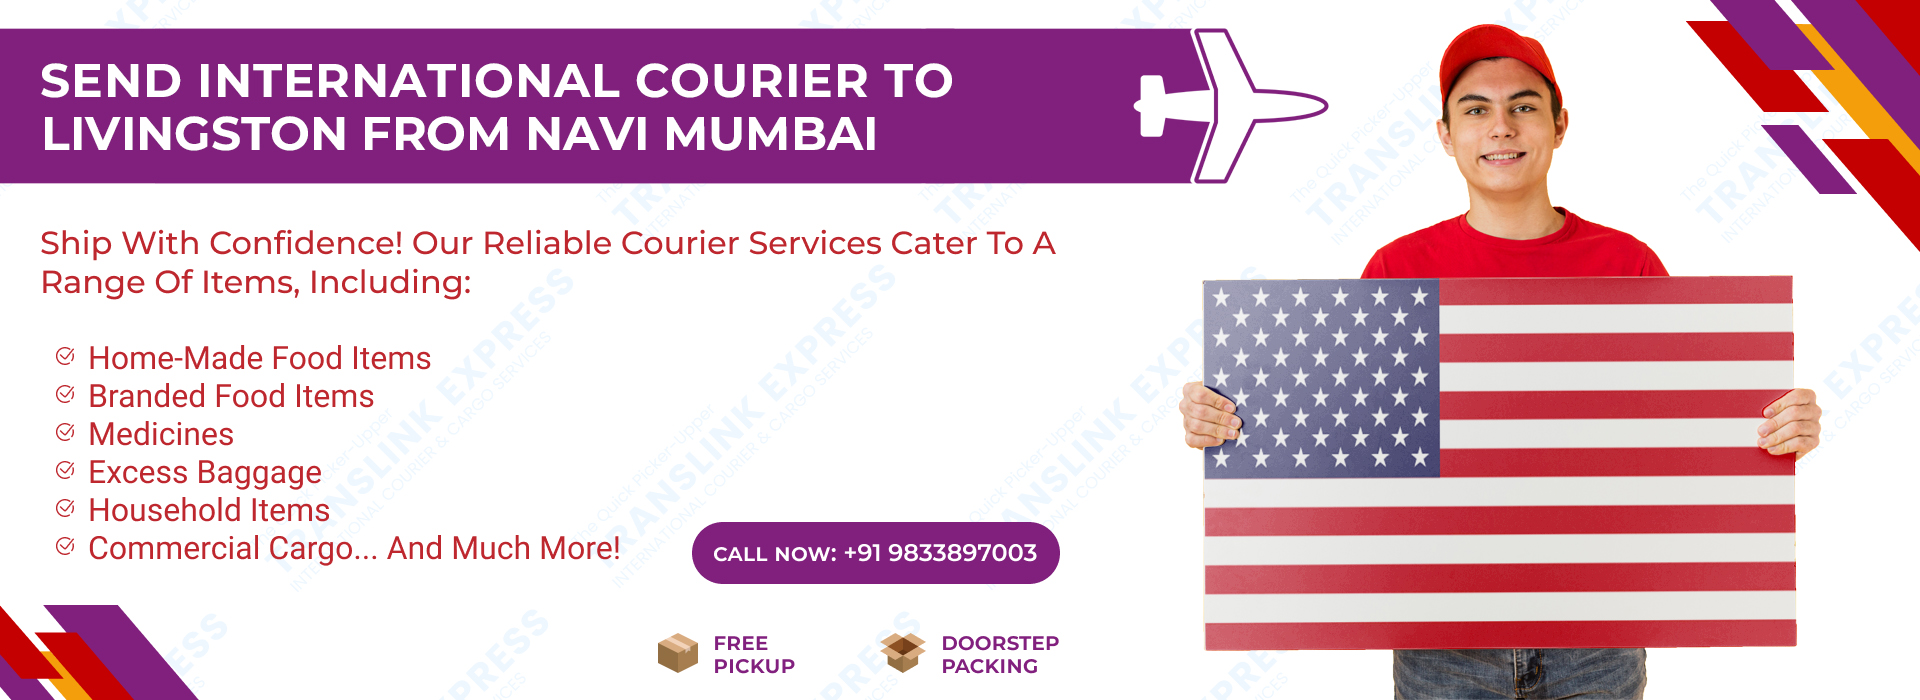 Courier to Livingston From Navi Mumbai